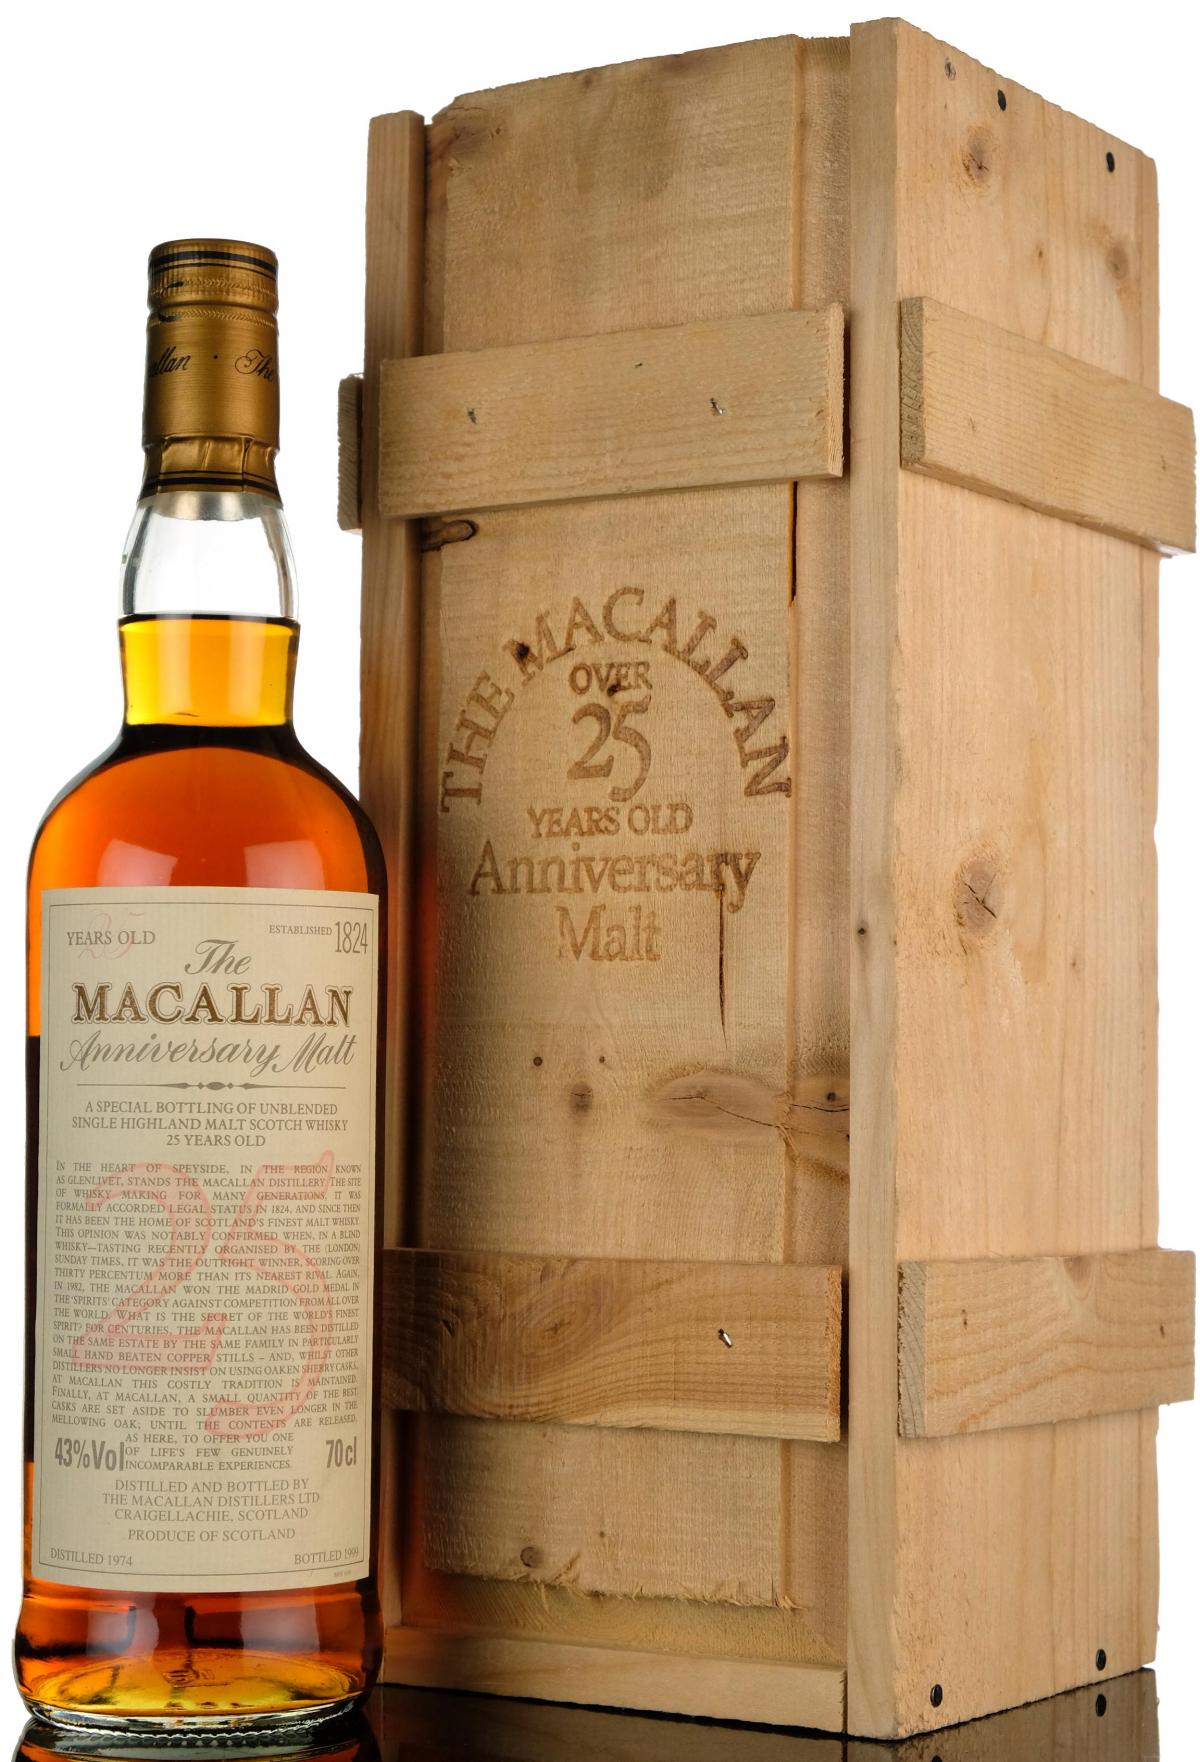 Macallan 1974-1999 - 25 Year Old - Anniversary Malt